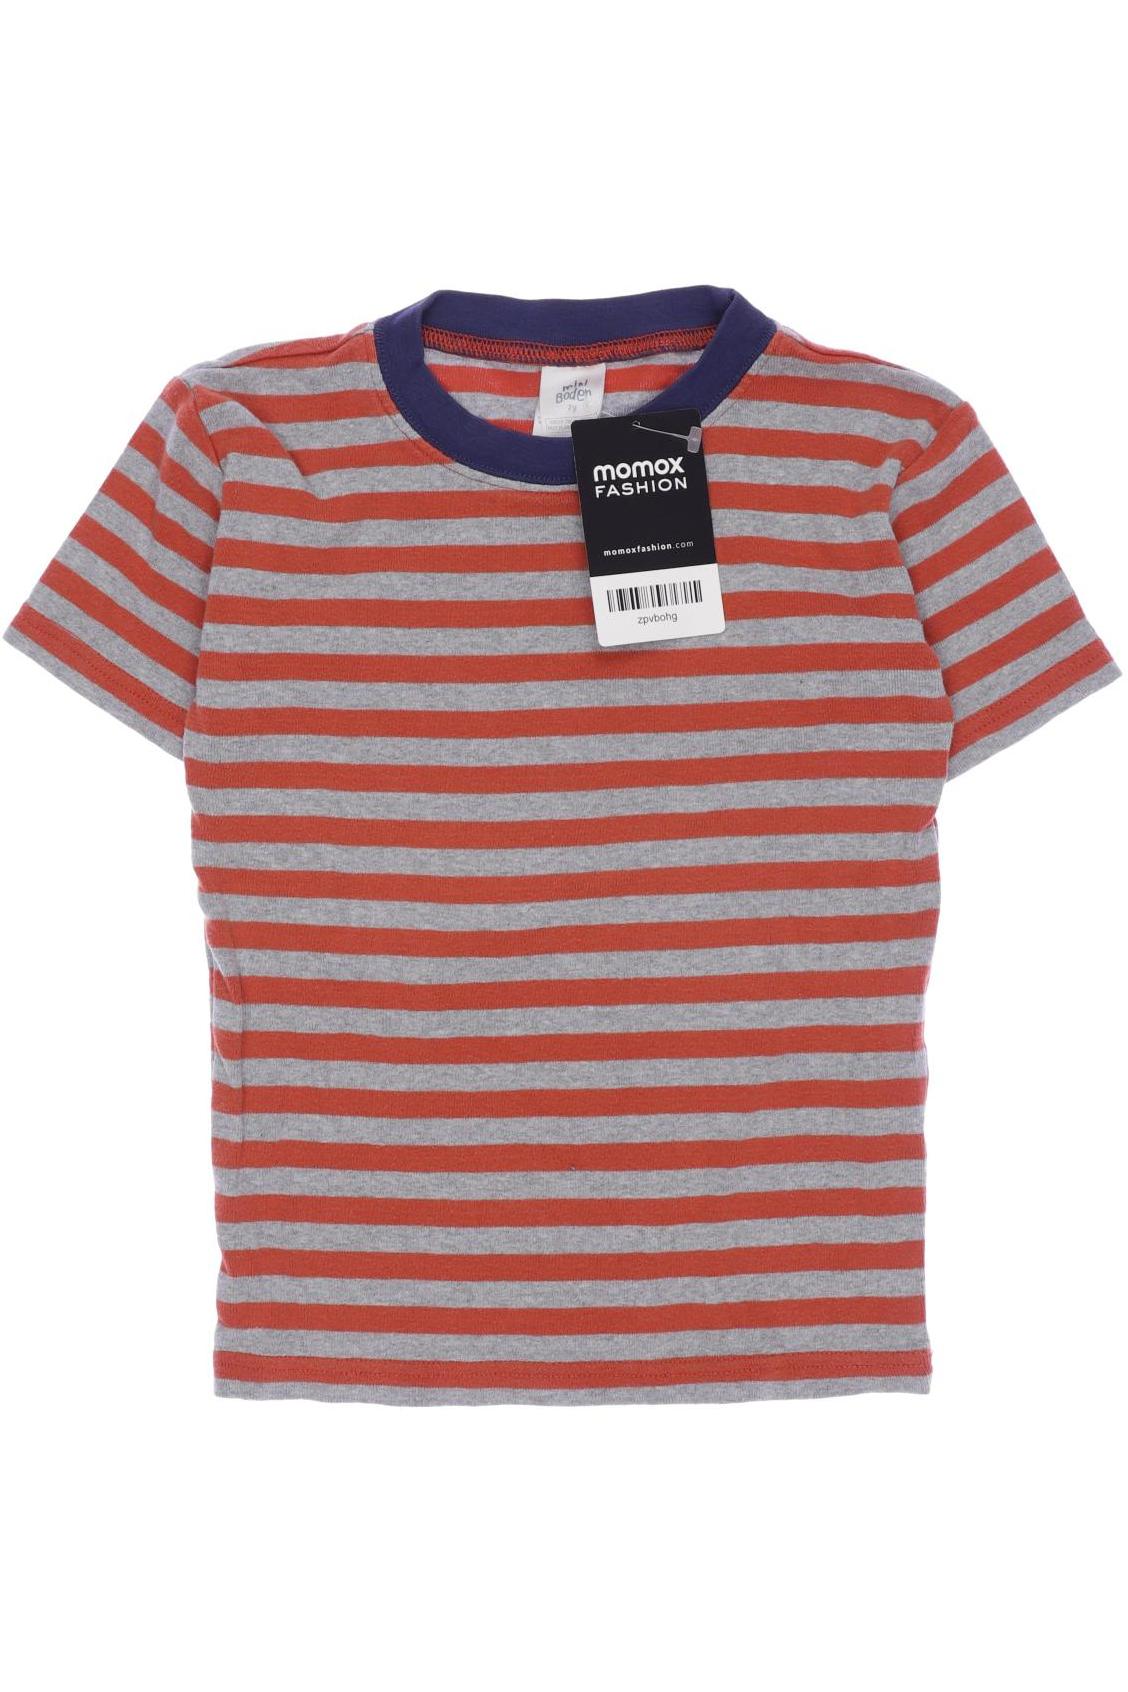 Mini Boden Herren T-Shirt, orange, Gr. 128 von Mini Boden